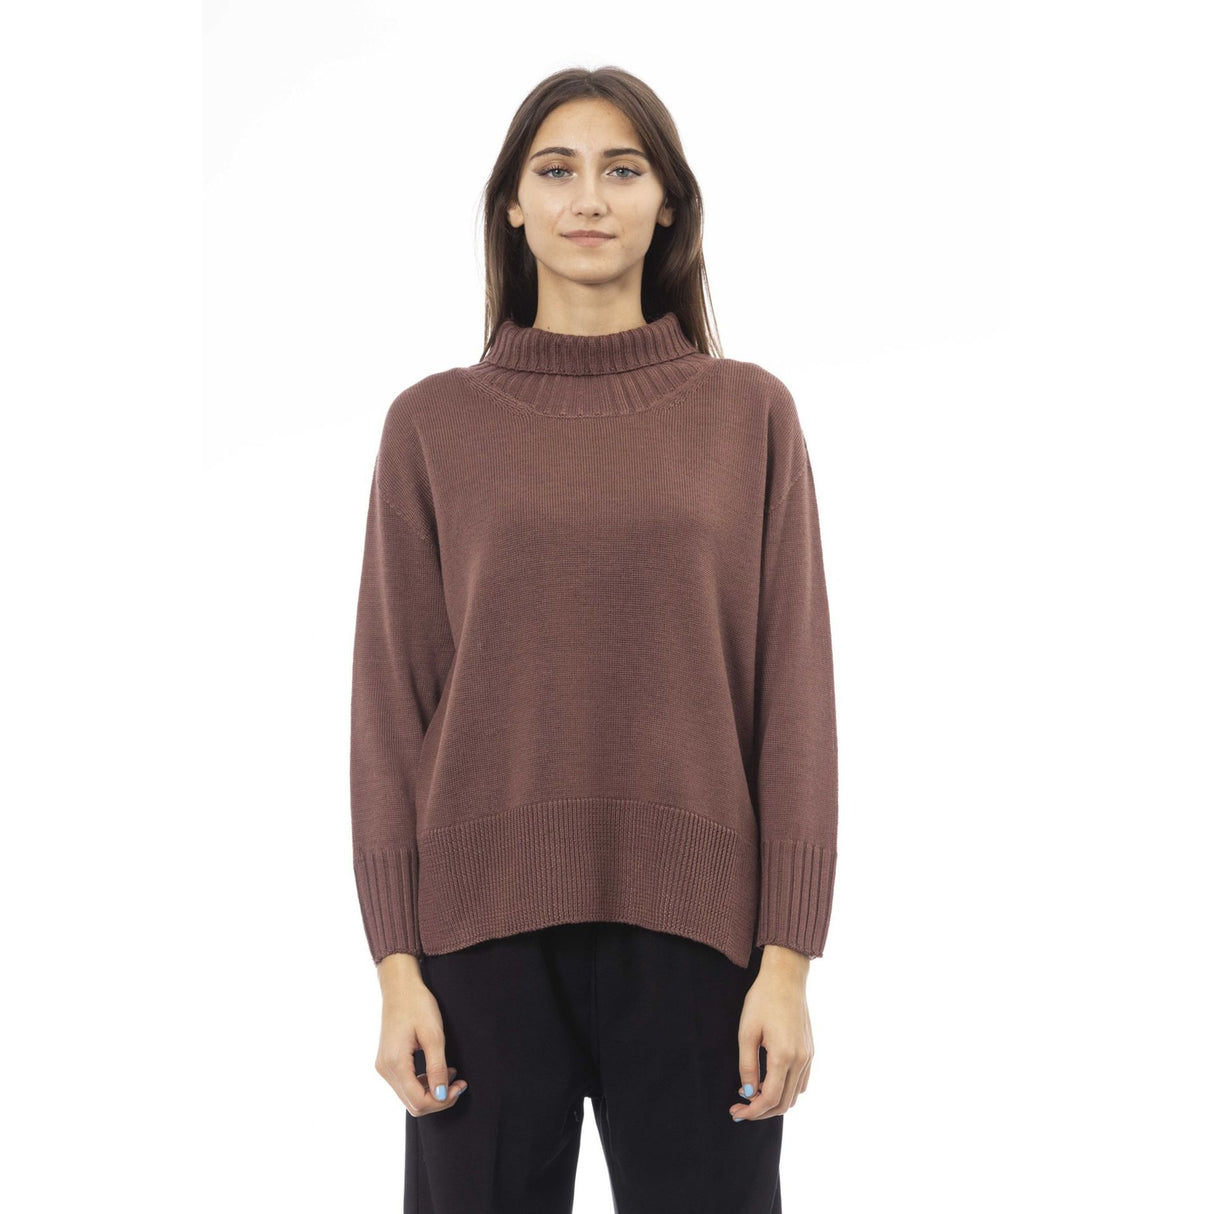 Women's sweater Turtleneck sweater Fall/Winter sweater Long sleeve sweater Italian-made sweater Warm sweater